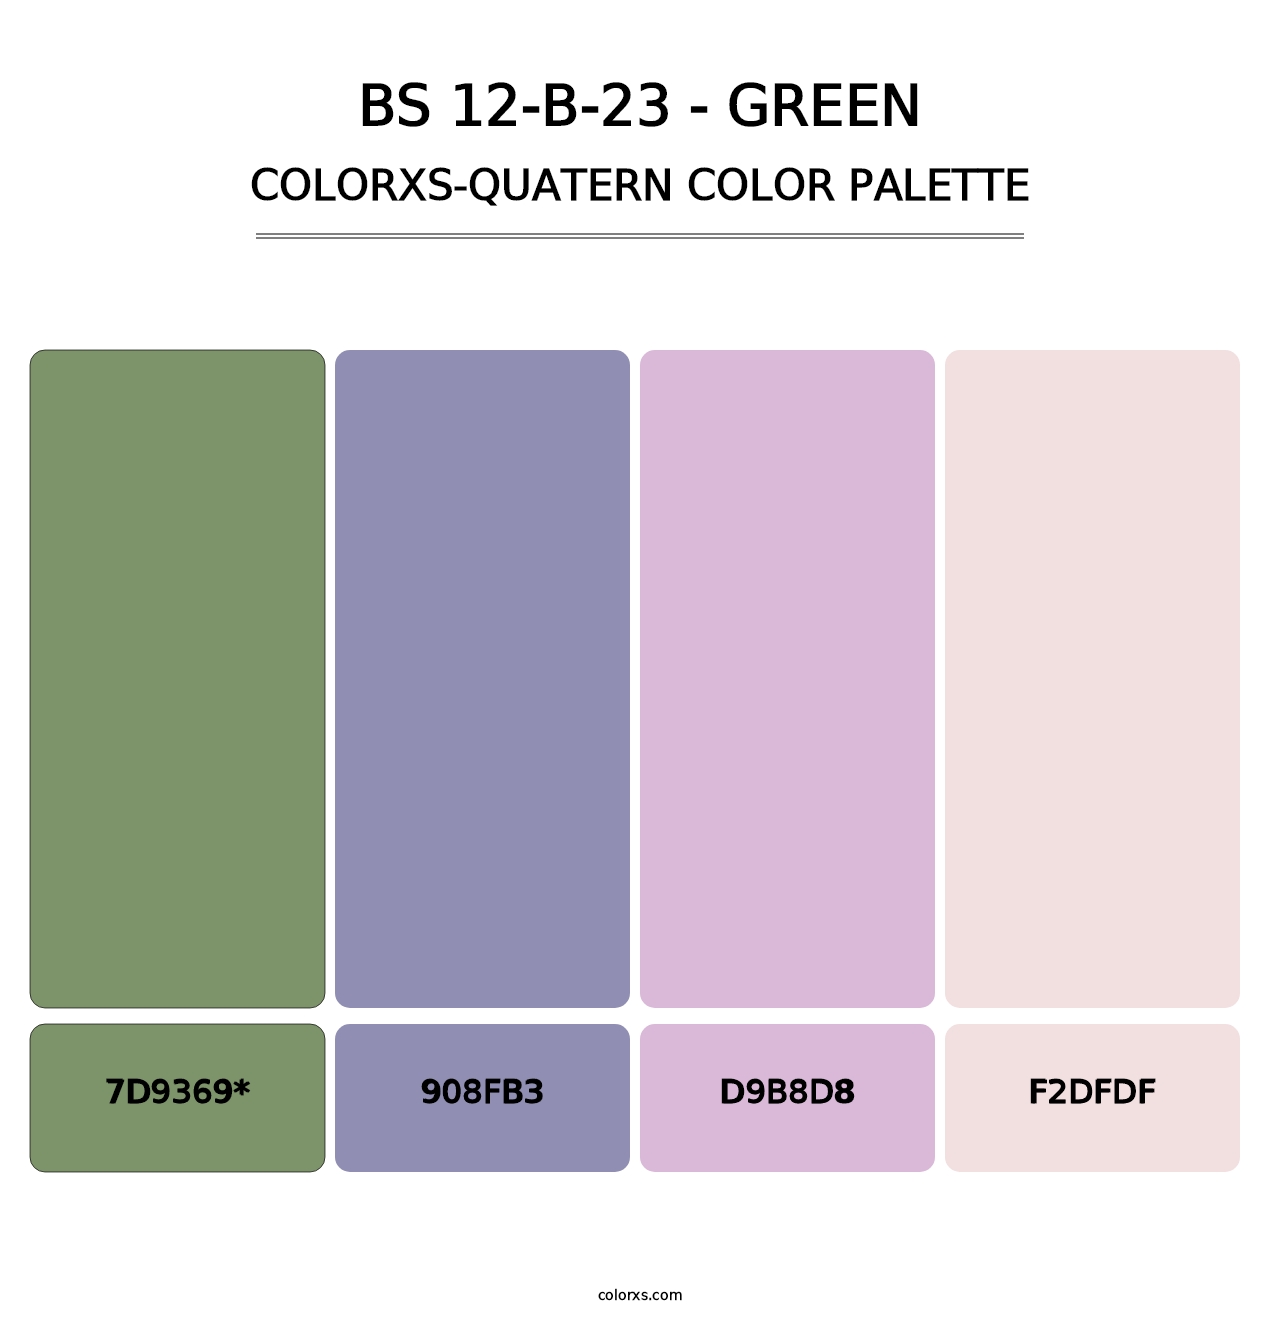 BS 12-B-23 - Green - Colorxs Quatern Palette